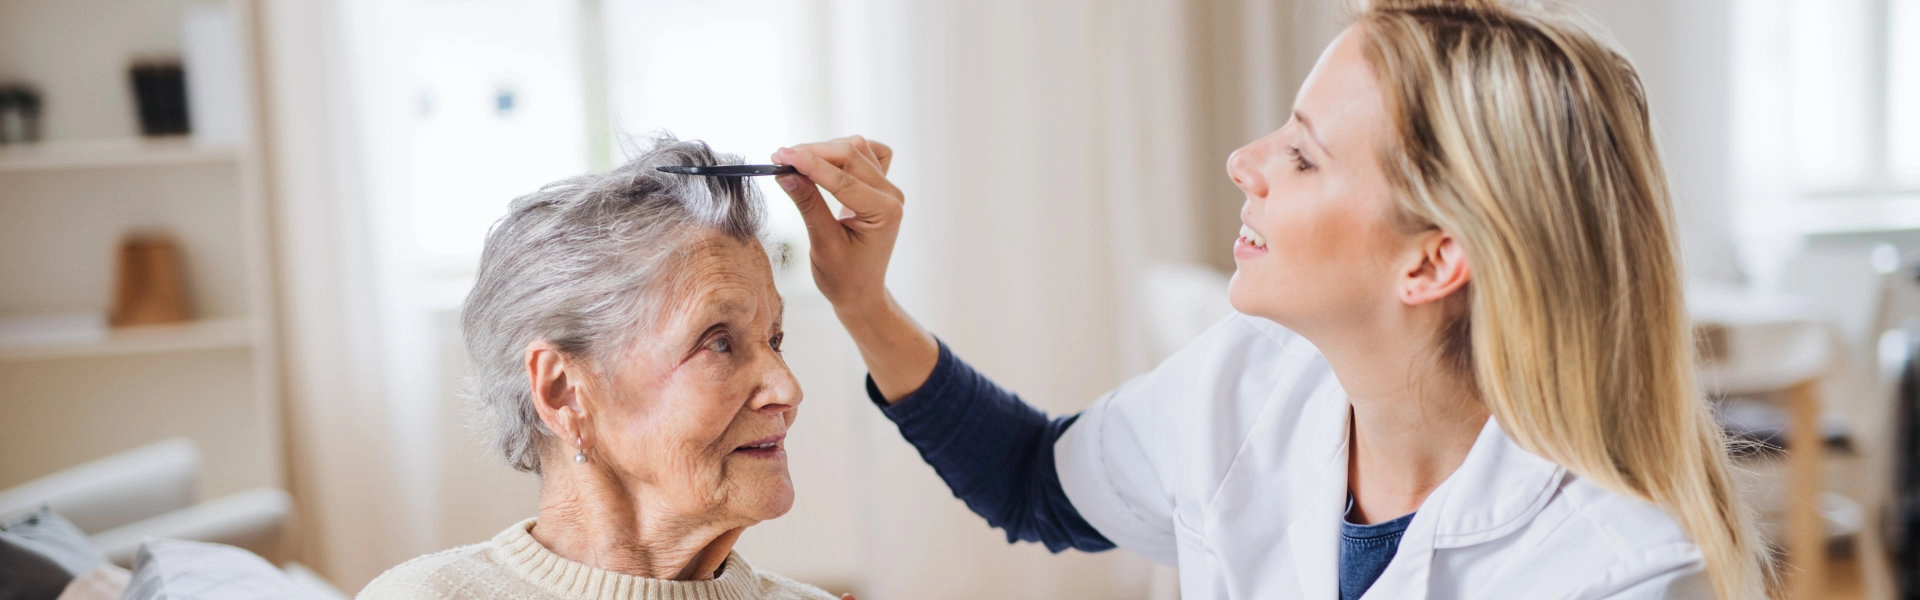 Caregiver combing hair